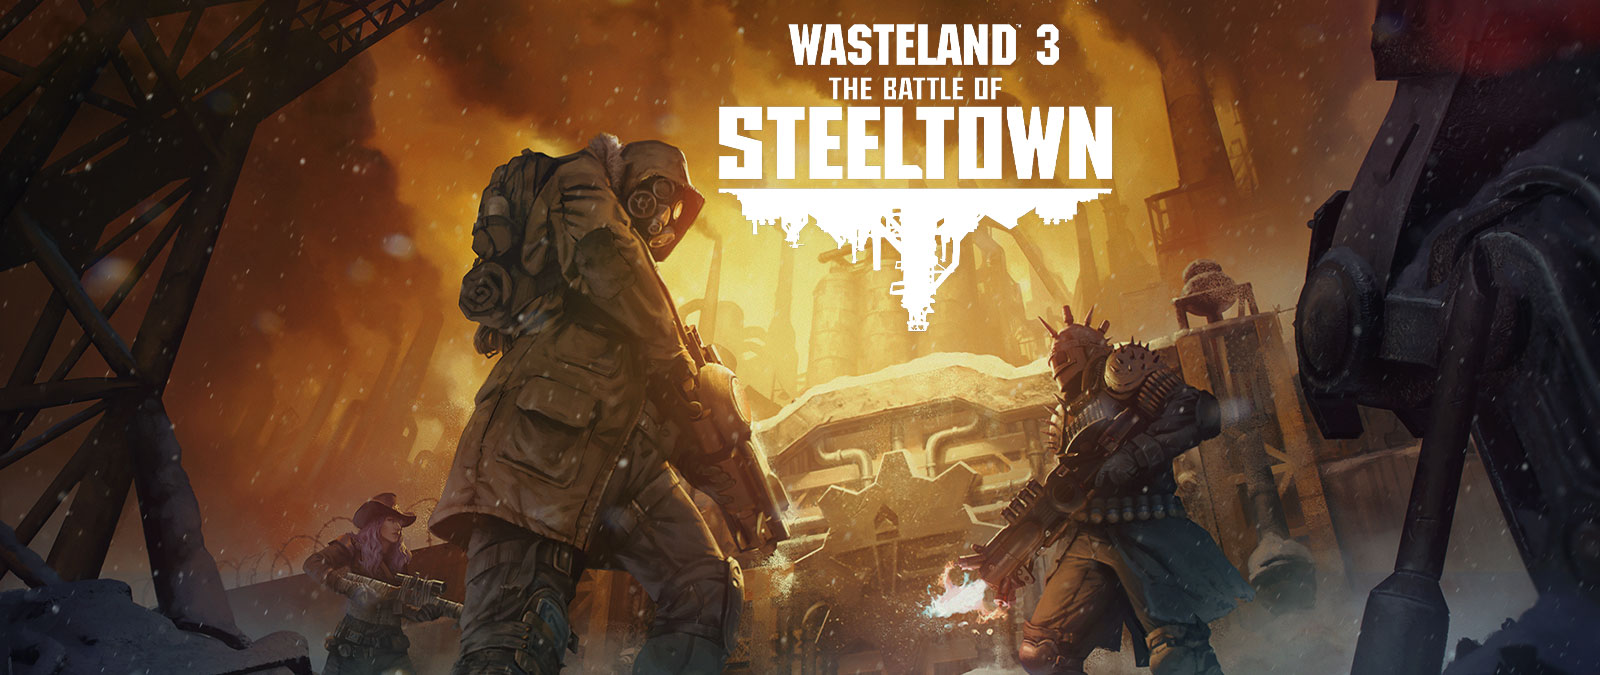 Wasteland 3: The Battle of Steeltown。在工業場景中，三名角色手持武器，身著盔甲立於門前